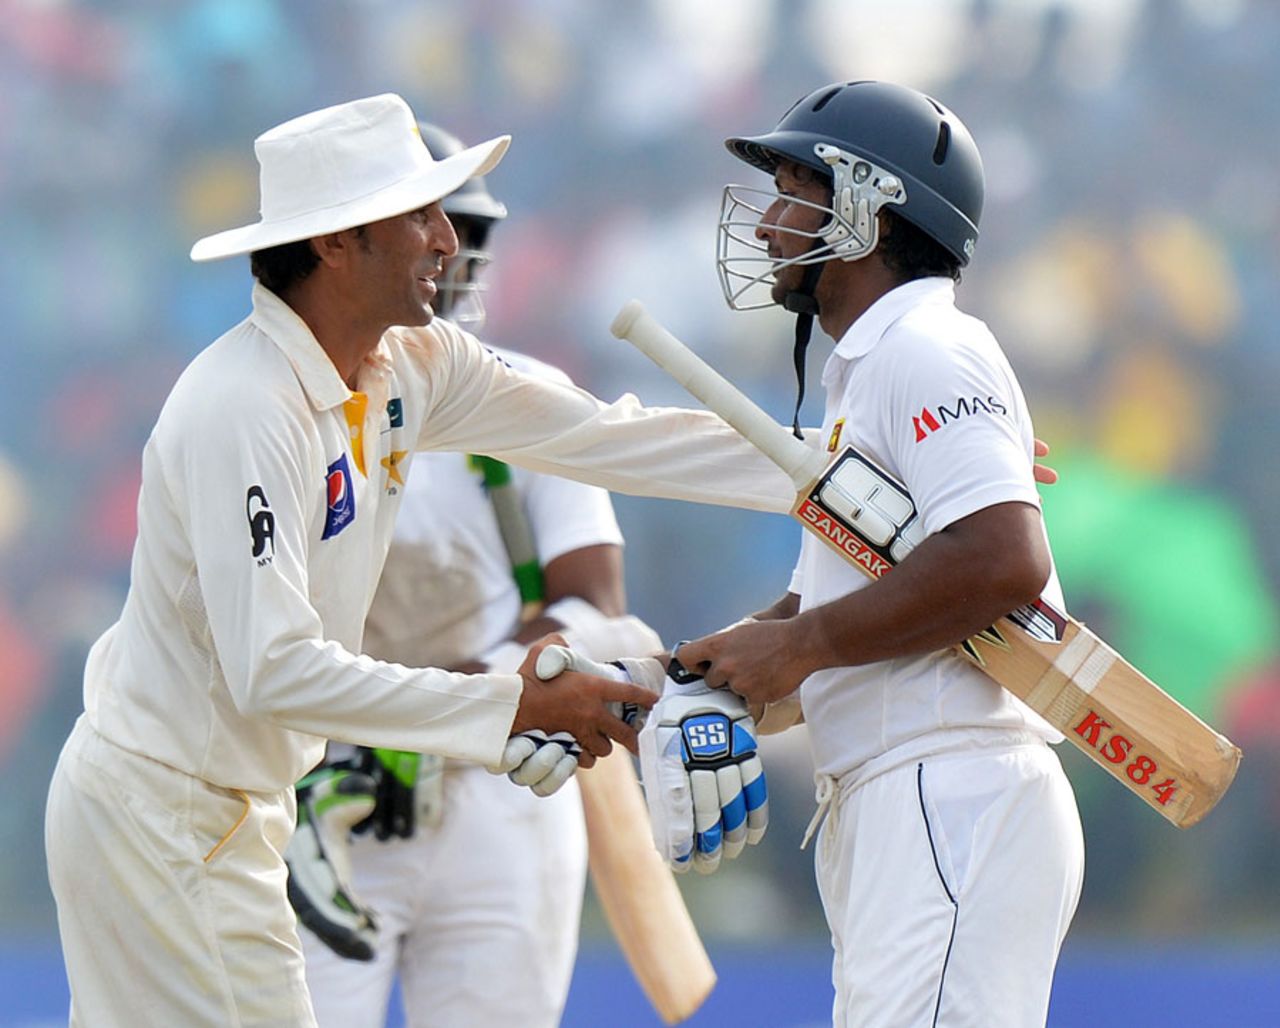 Younis Khan congratulates Kumar Sangakkara on his double-century, Sri Lanka v Pakistan, 1st Test, Galle, 4th day, August 9, 2014